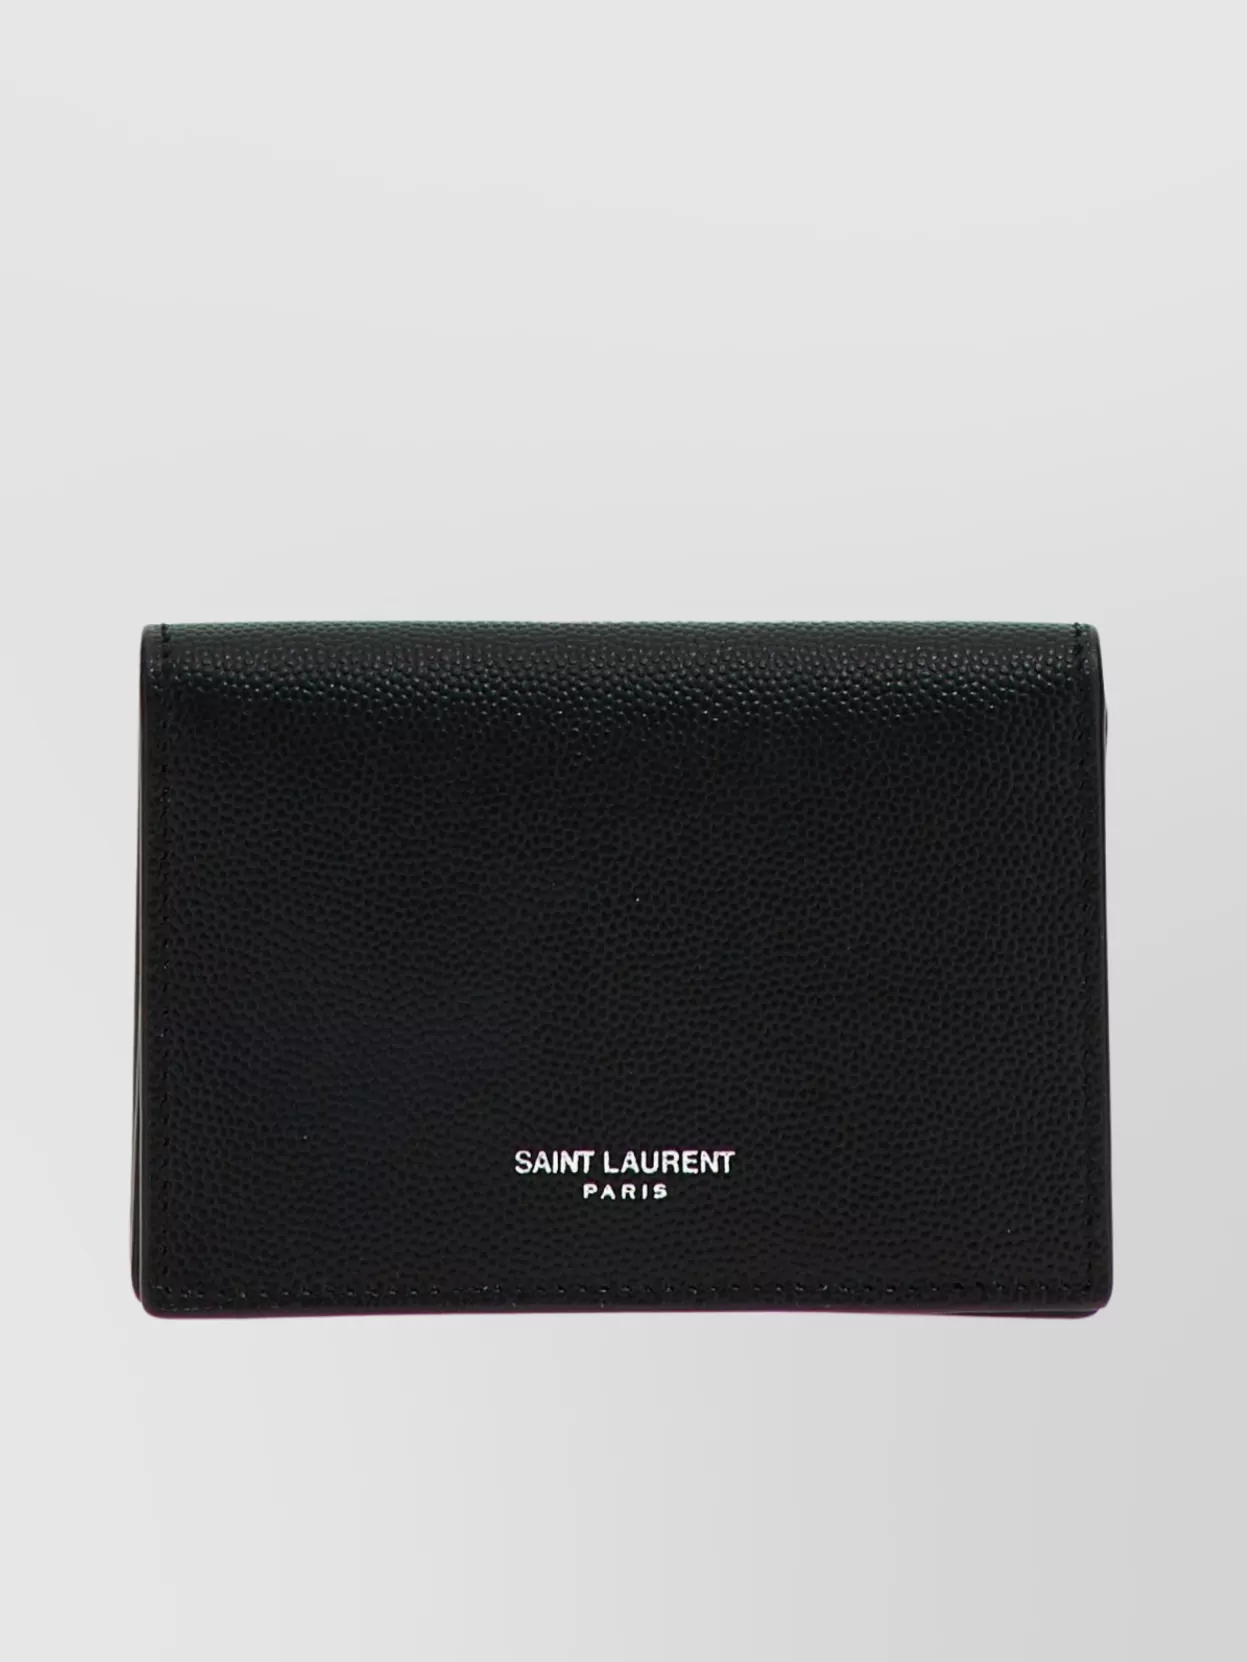 Saint Laurent Paris Business Card Holder In Black